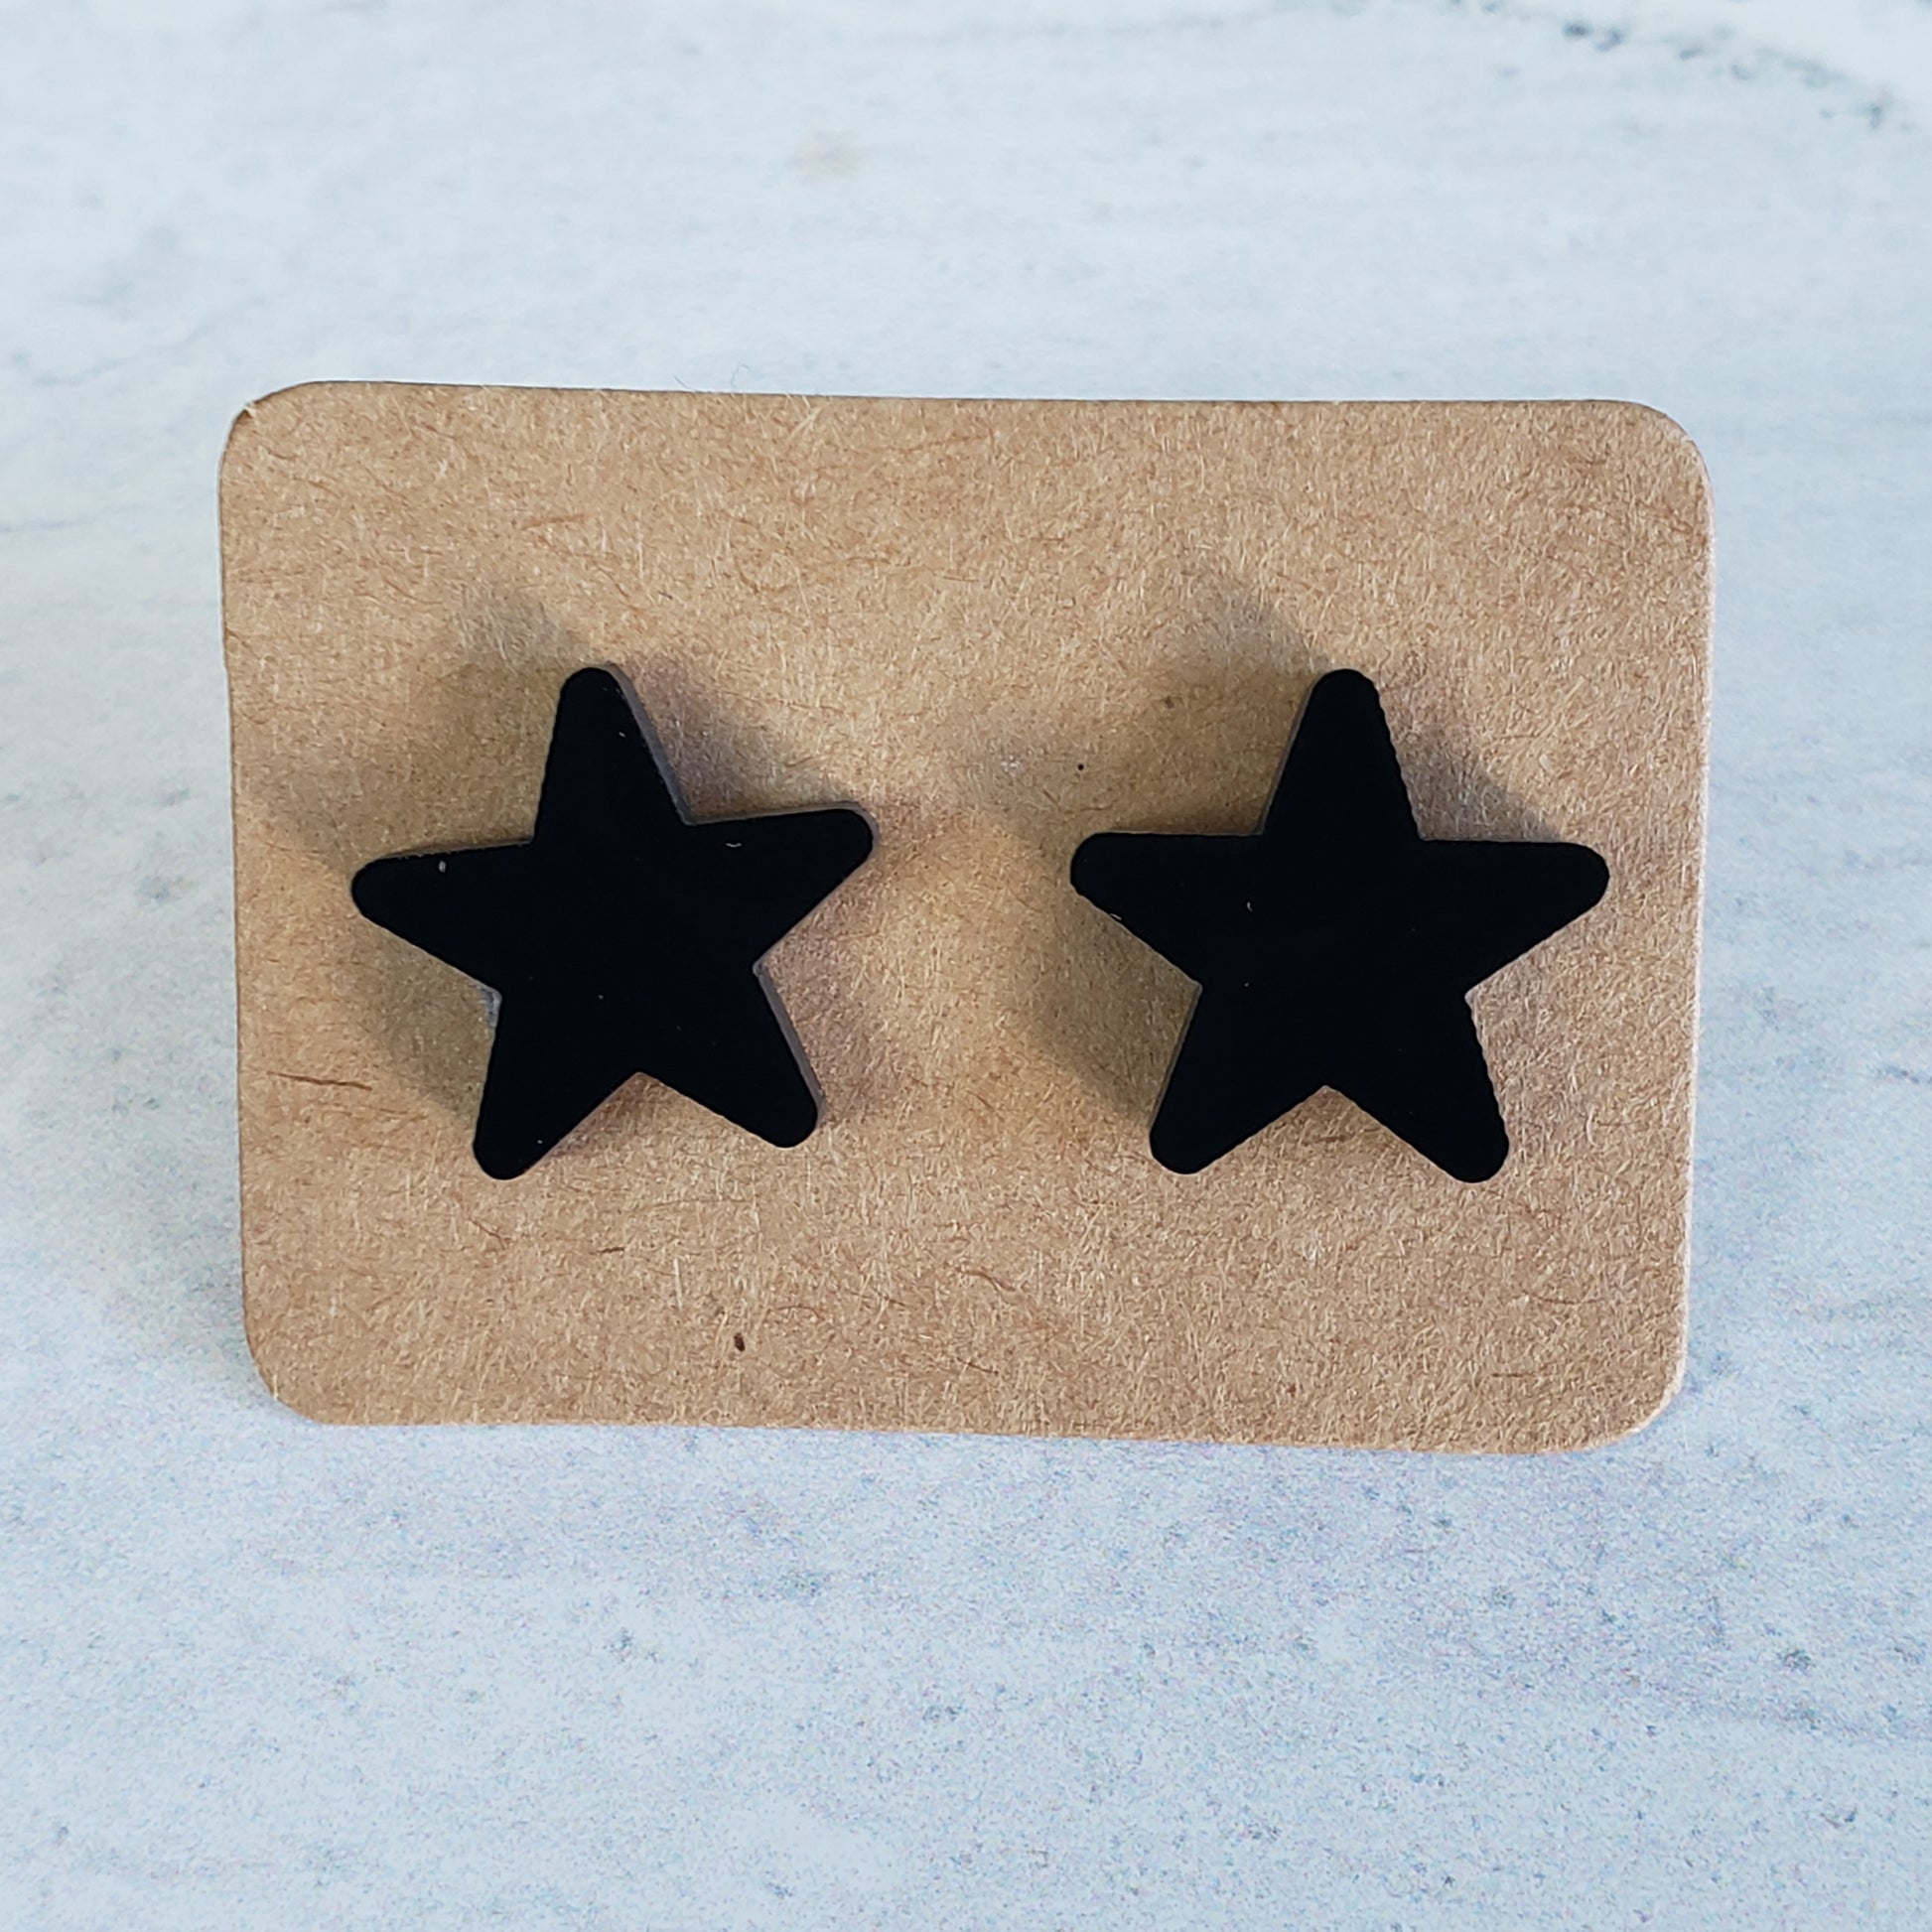 Black star stud earrings on earring card